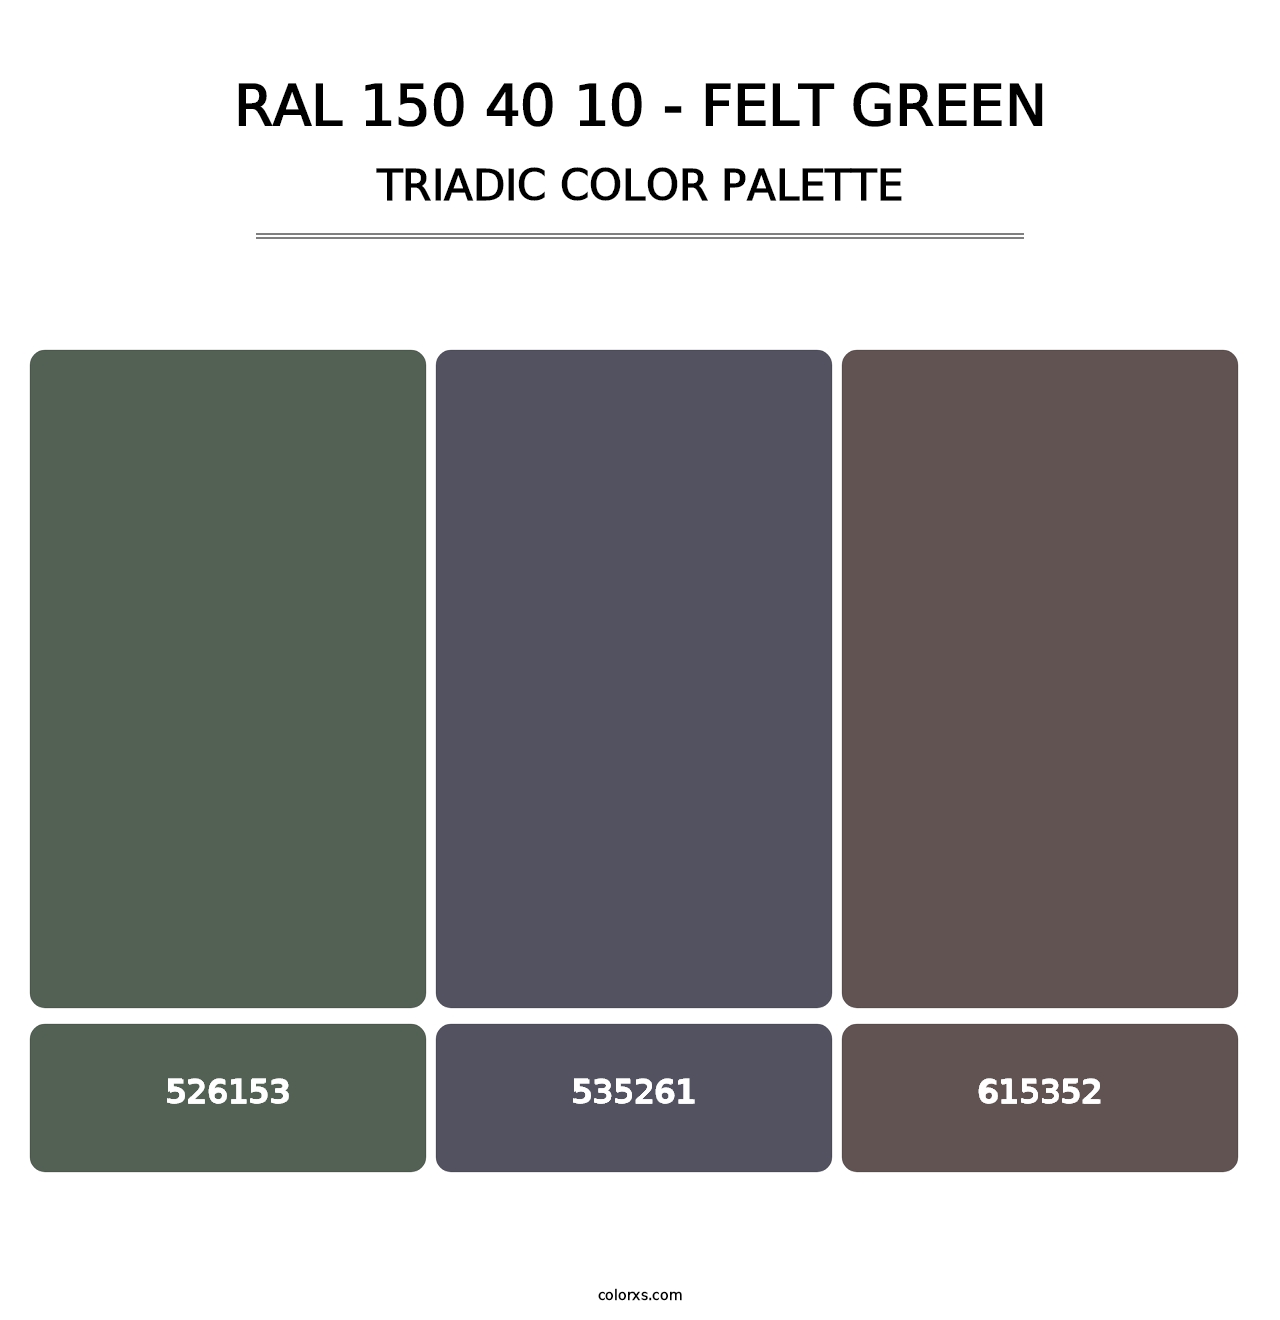 RAL 150 40 10 - Felt Green - Triadic Color Palette